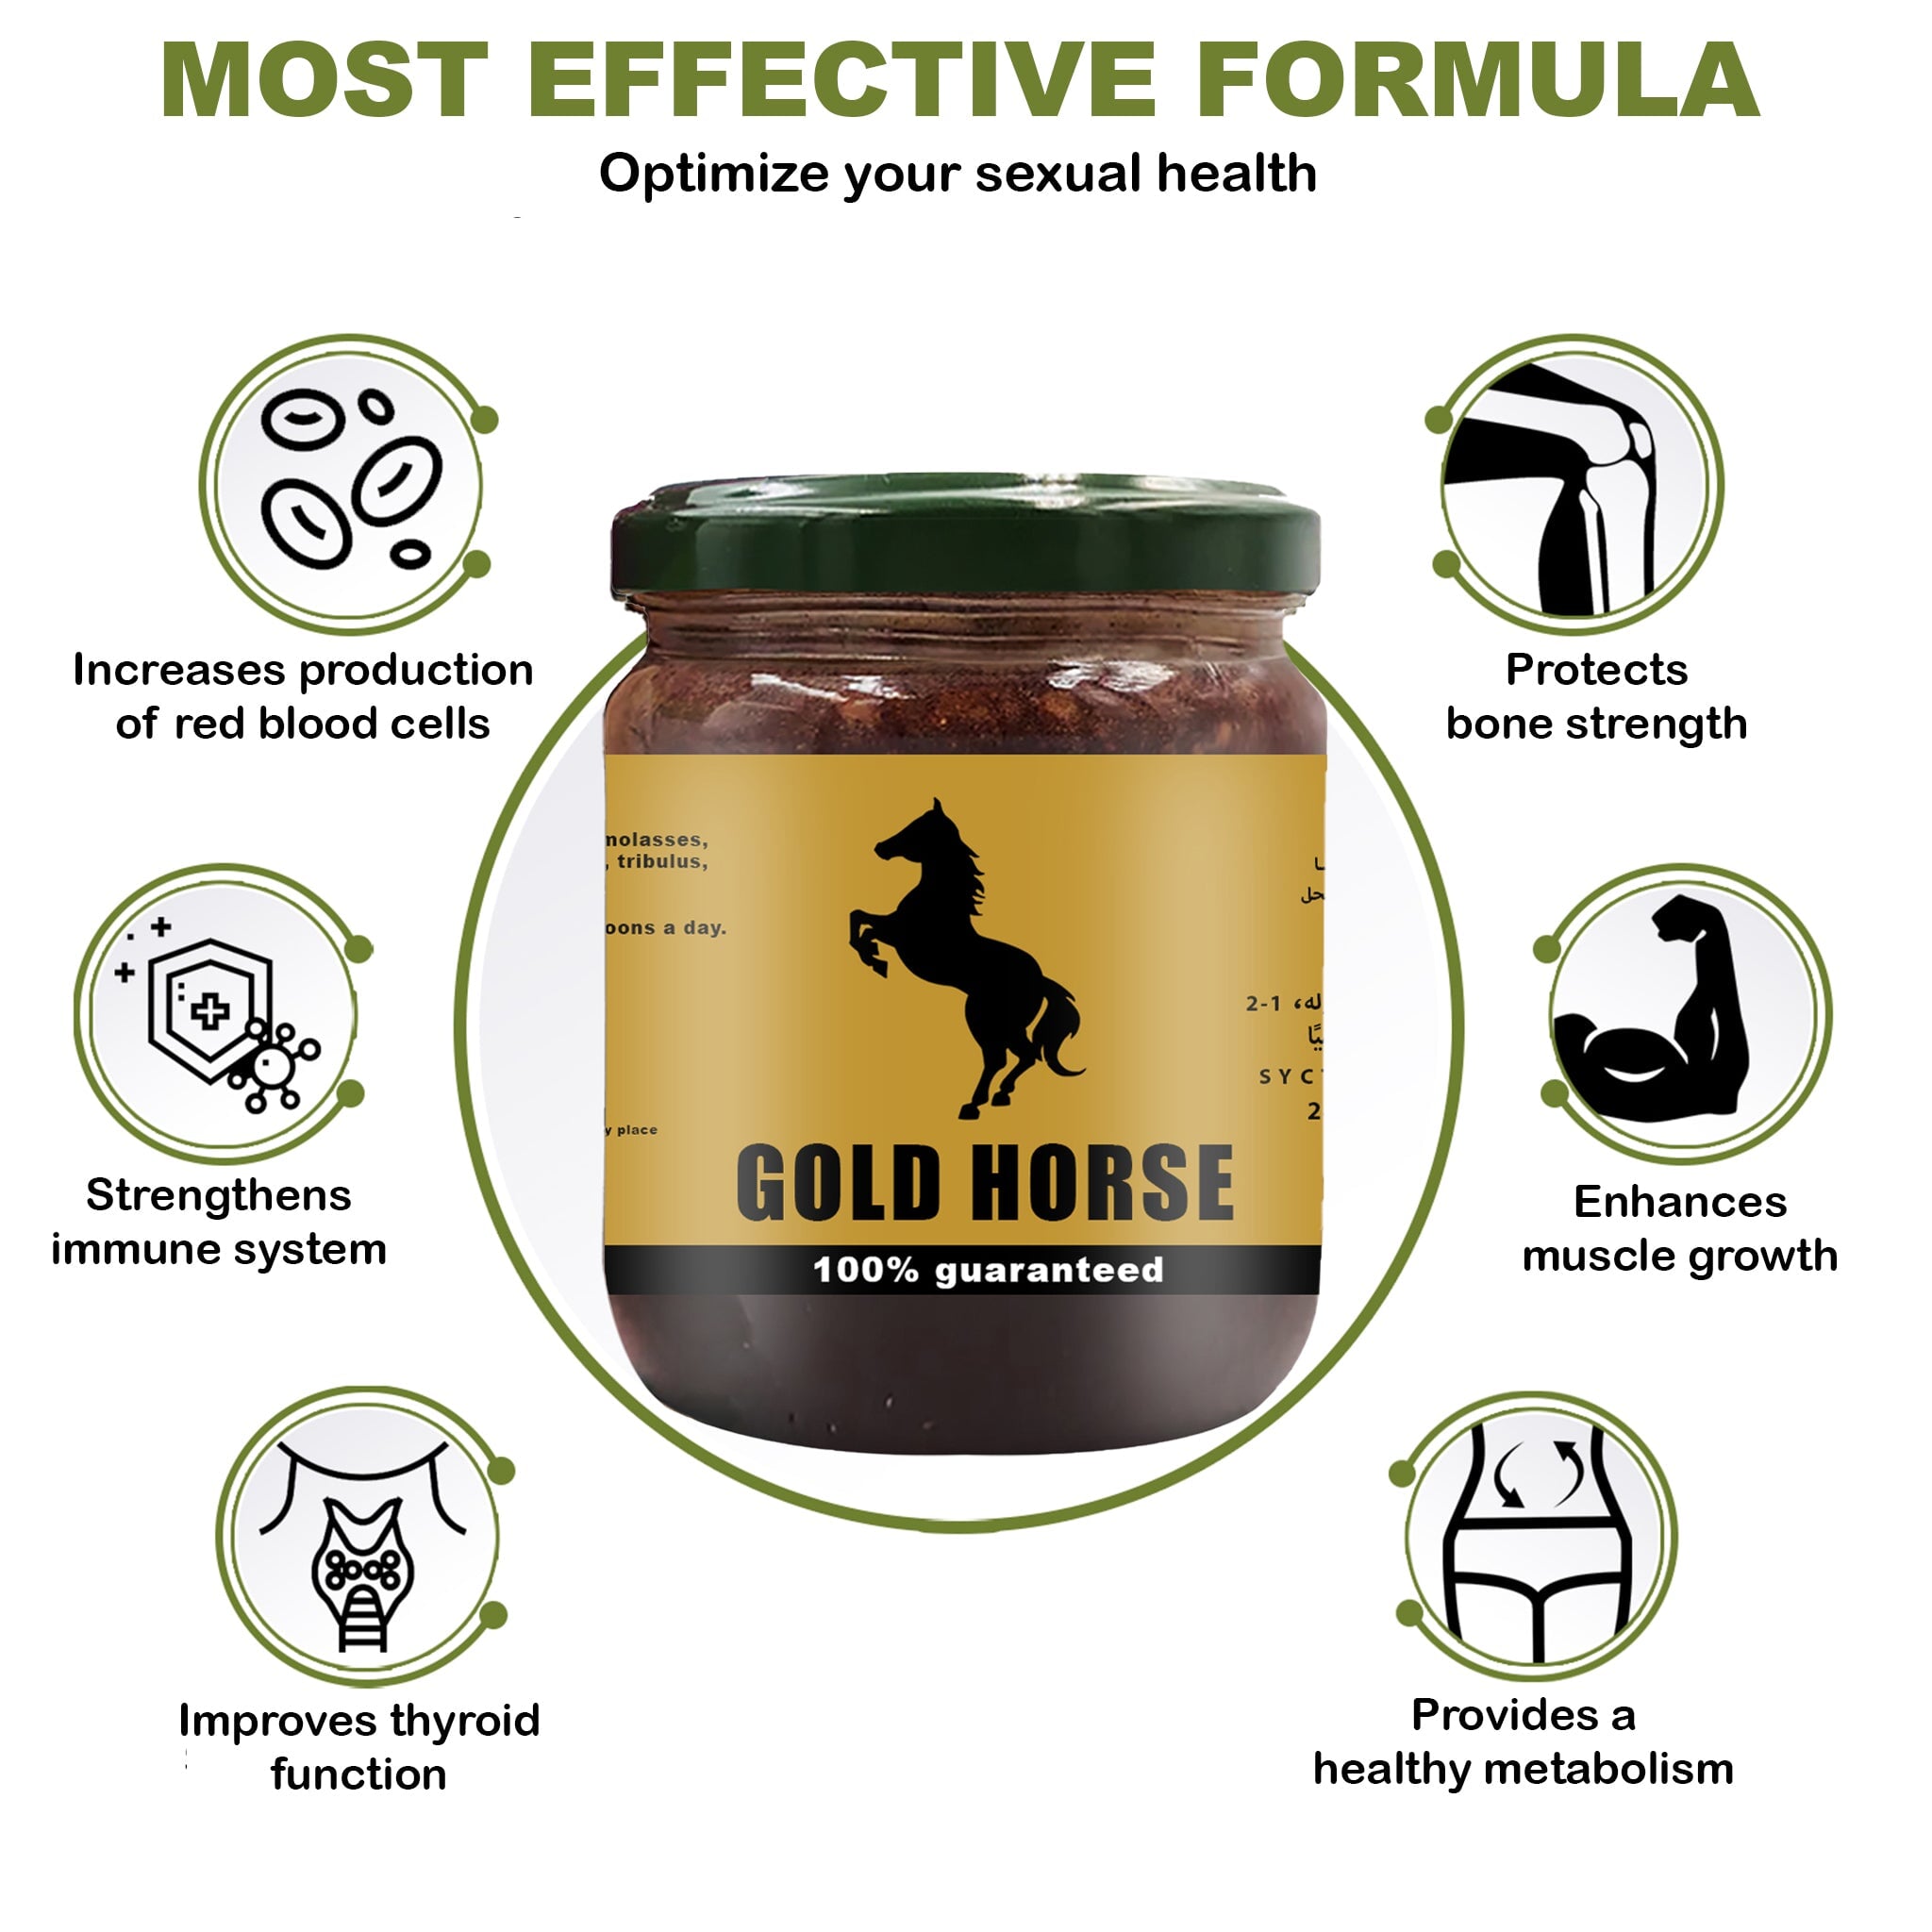 Gold Horse honey